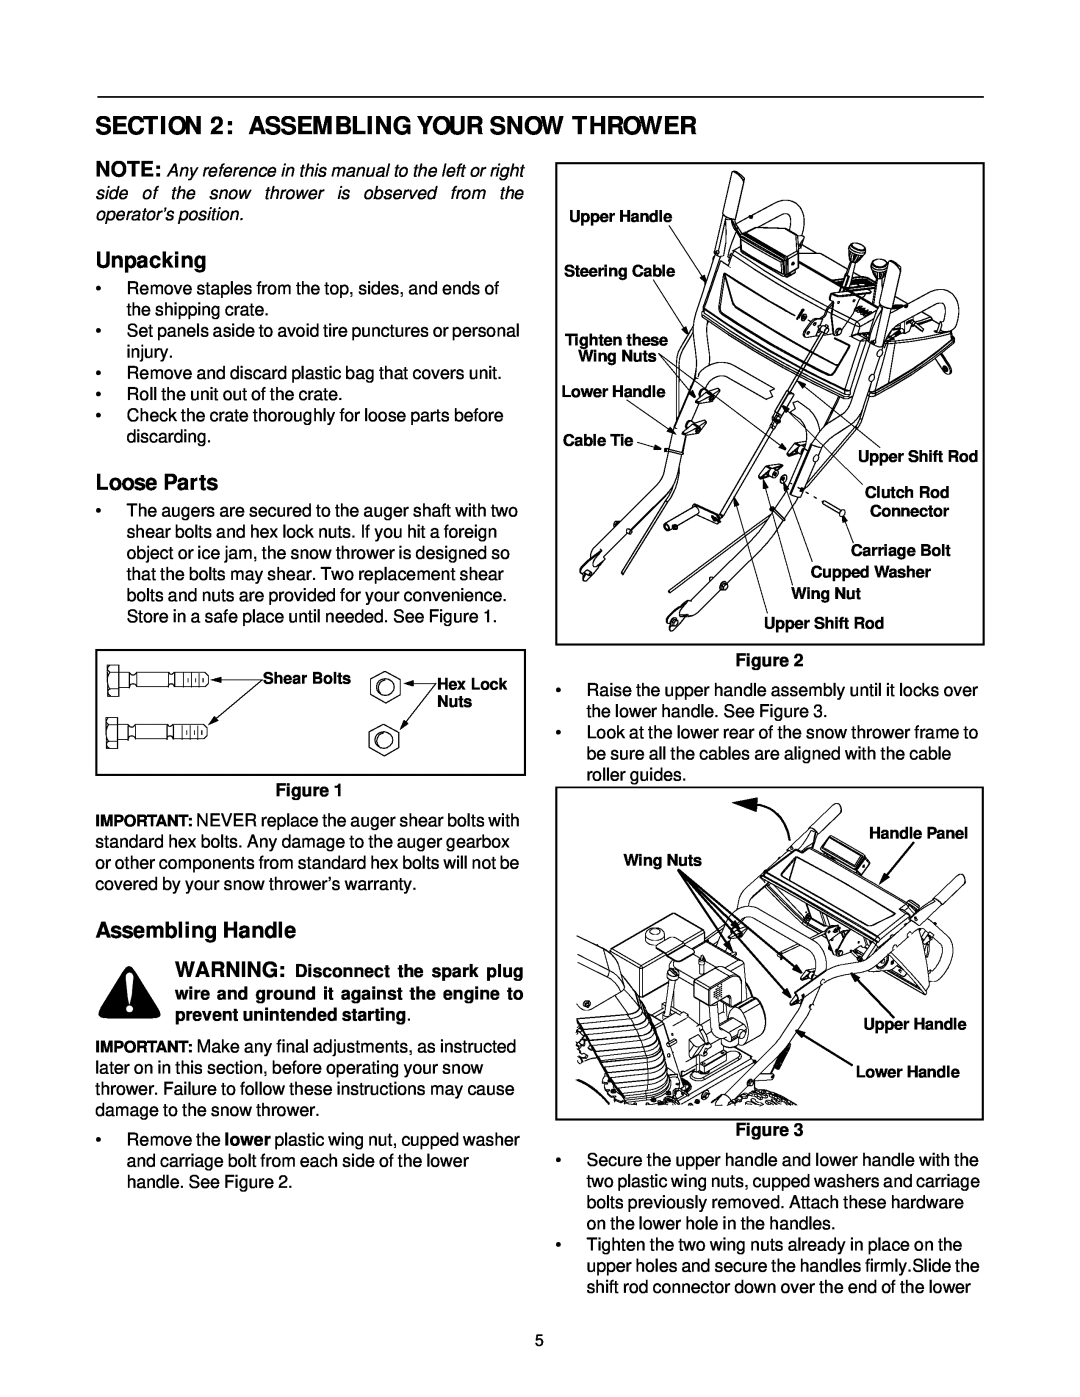 Yard-Man 31AE993I401 manual Assembling Your Snow Thrower, Unpacking, Loose Parts, Assembling Handle, Figure 